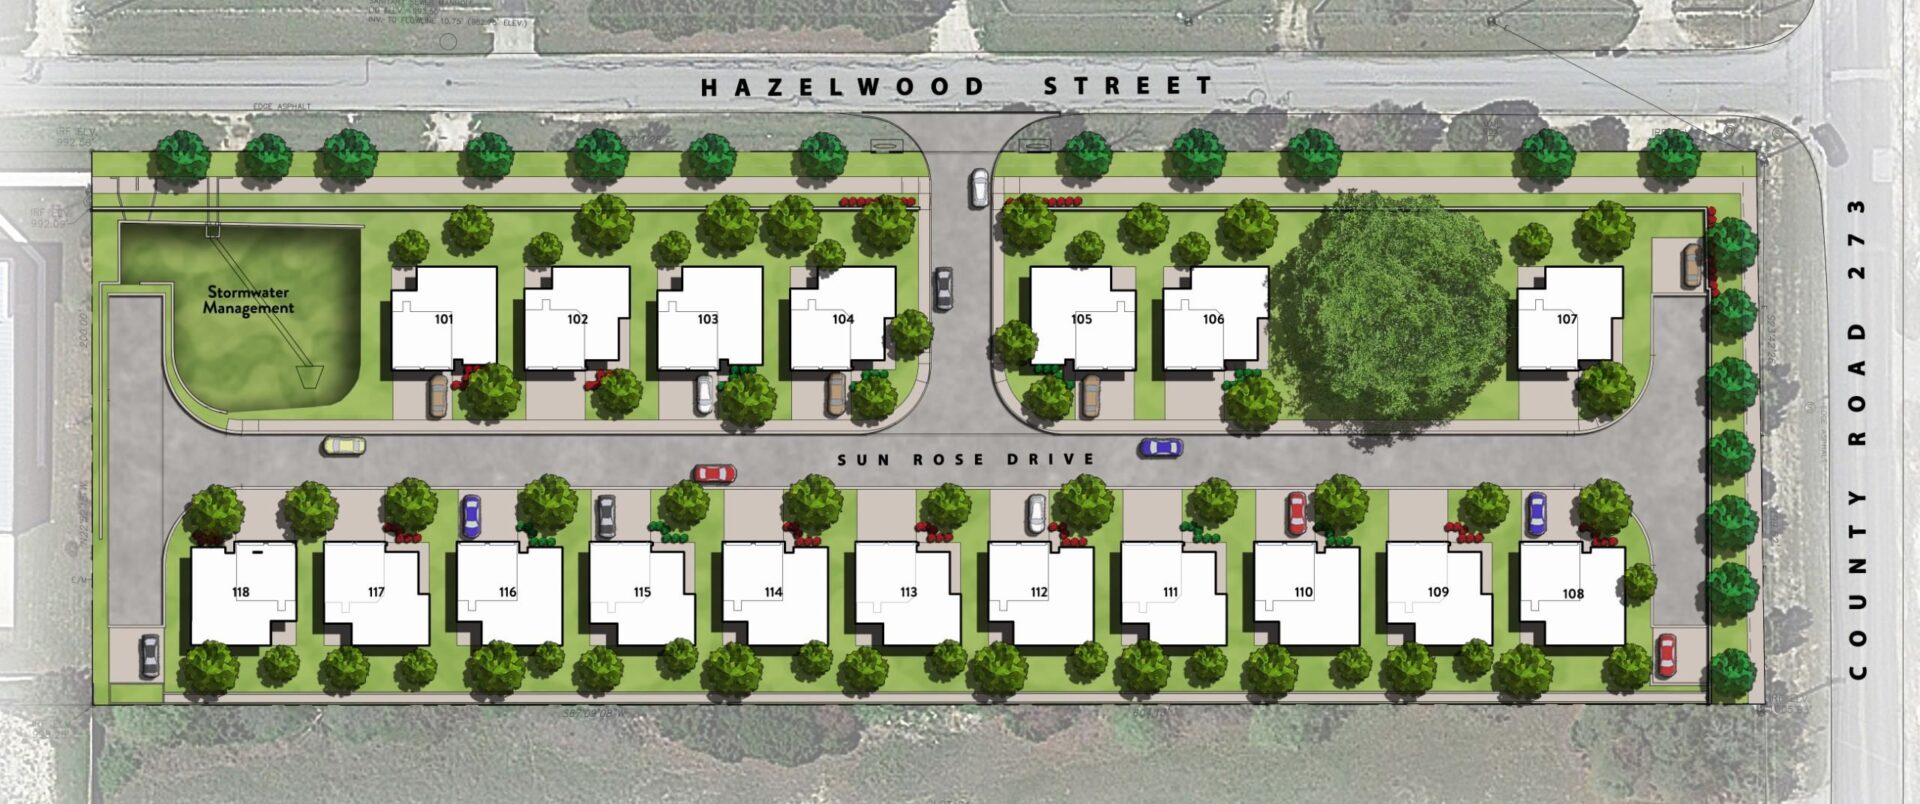 A map of the hazelwood street development.